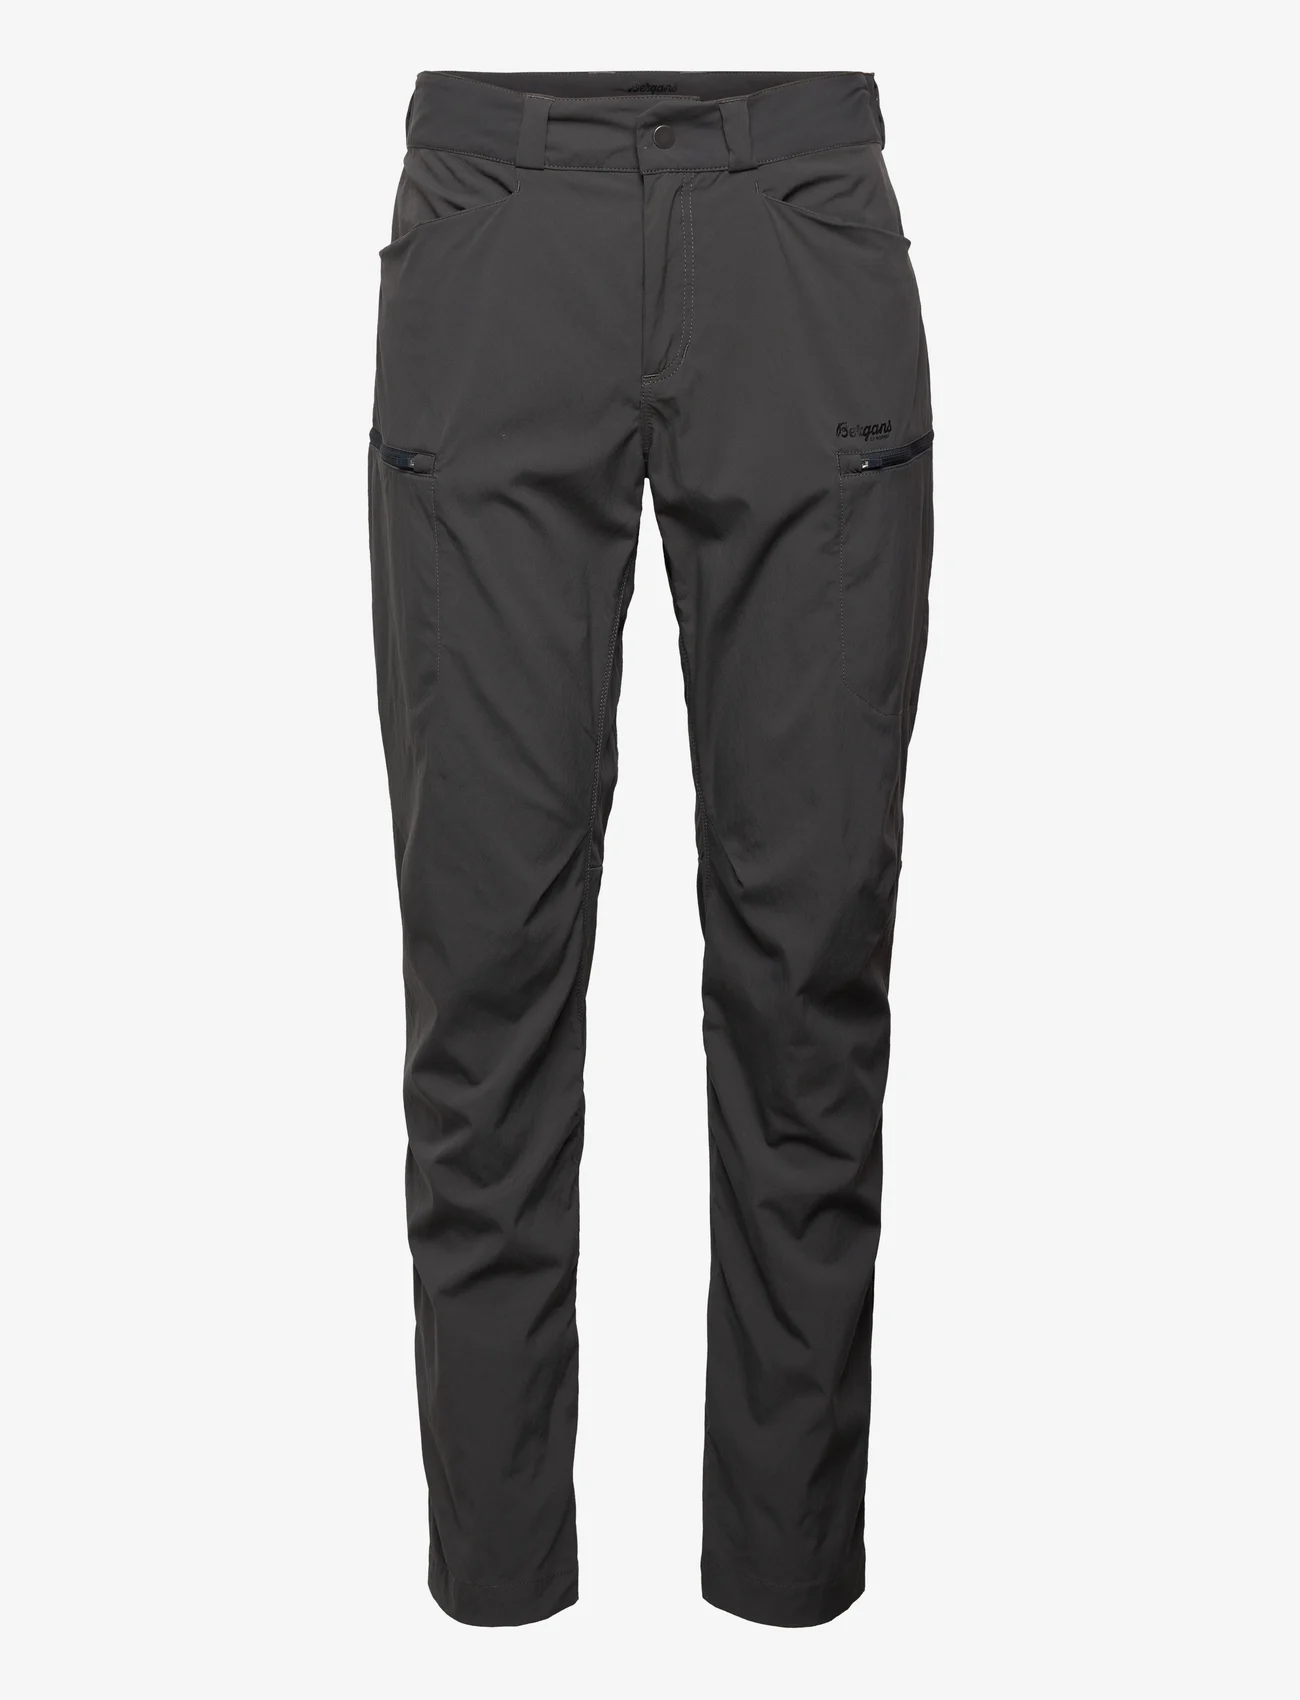 Bergans - Utne V5 Pants - lauko kelnės - solid charcoal - 0